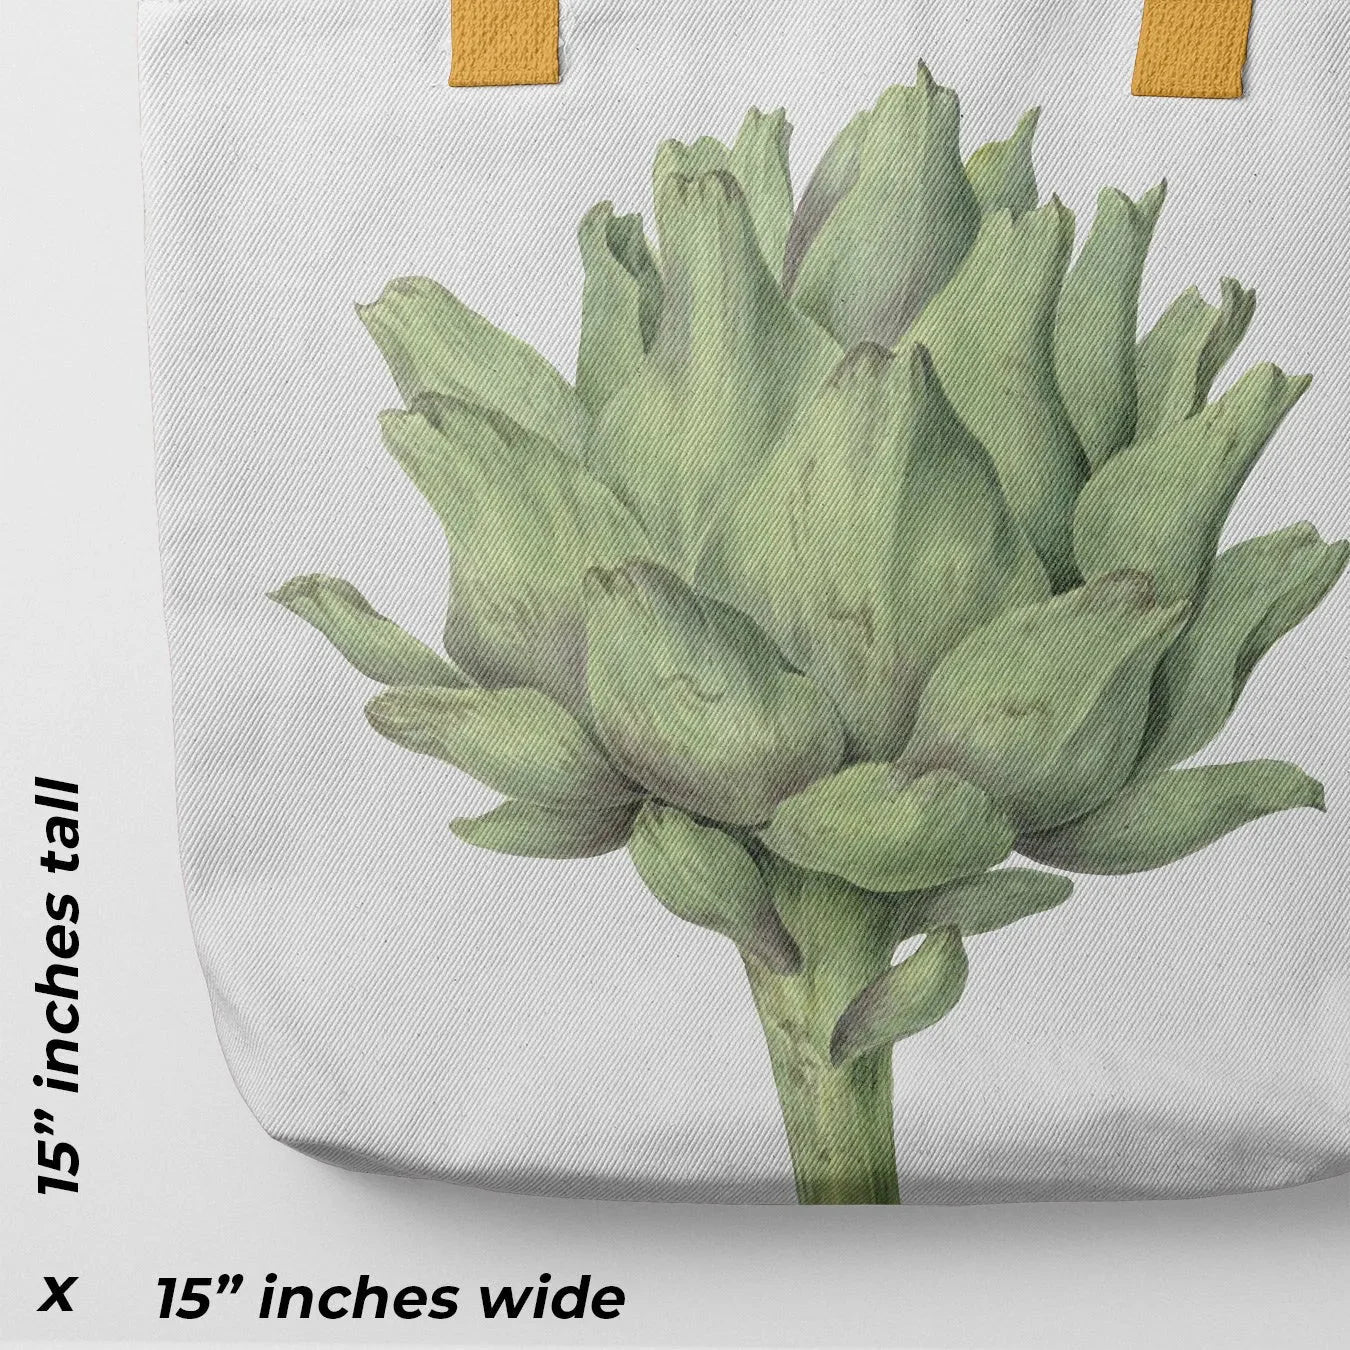 Heartichoke Tote - Silver Platter - Heavy Duty Reusable Grocery Bag - Shopping Totes - Aesthetic Art